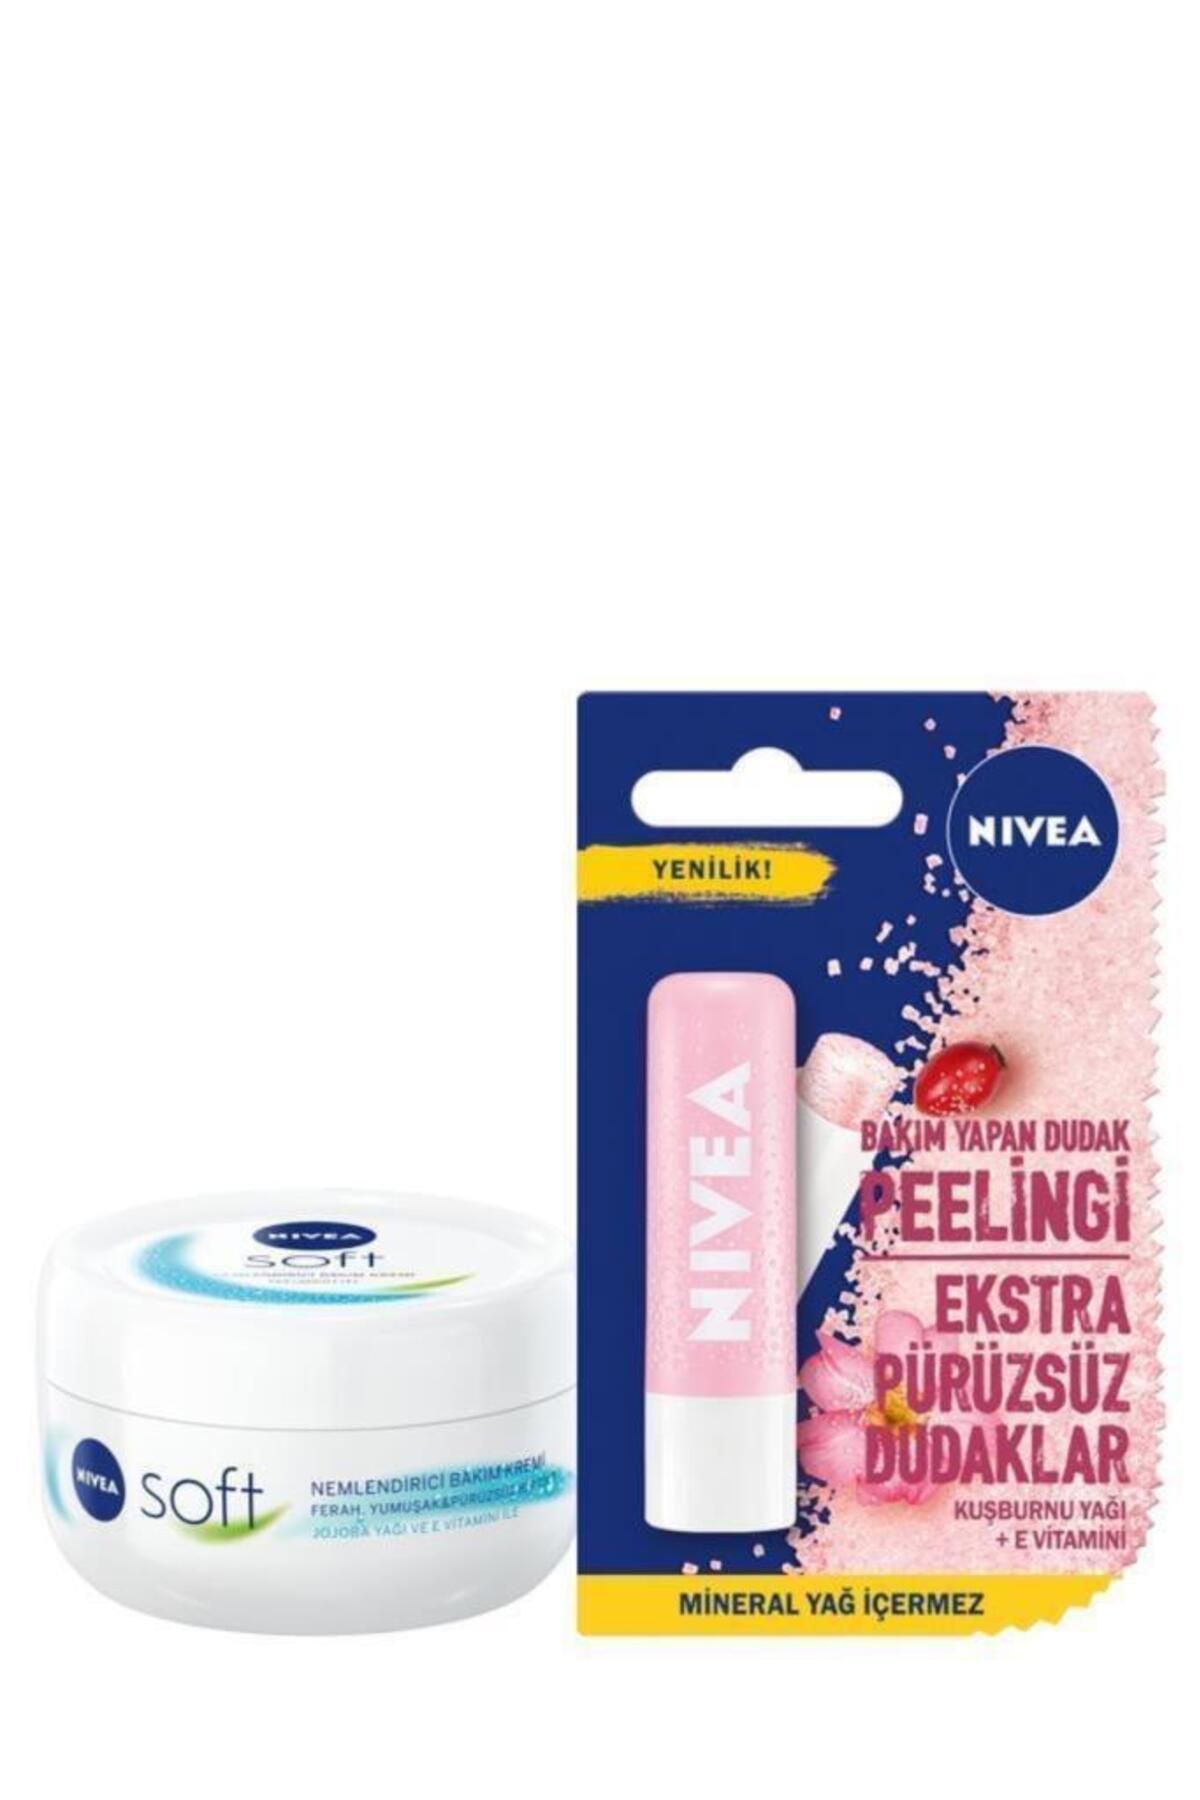 NIVEA Soft 200 Ml + Kuşburnu Lip Peeling